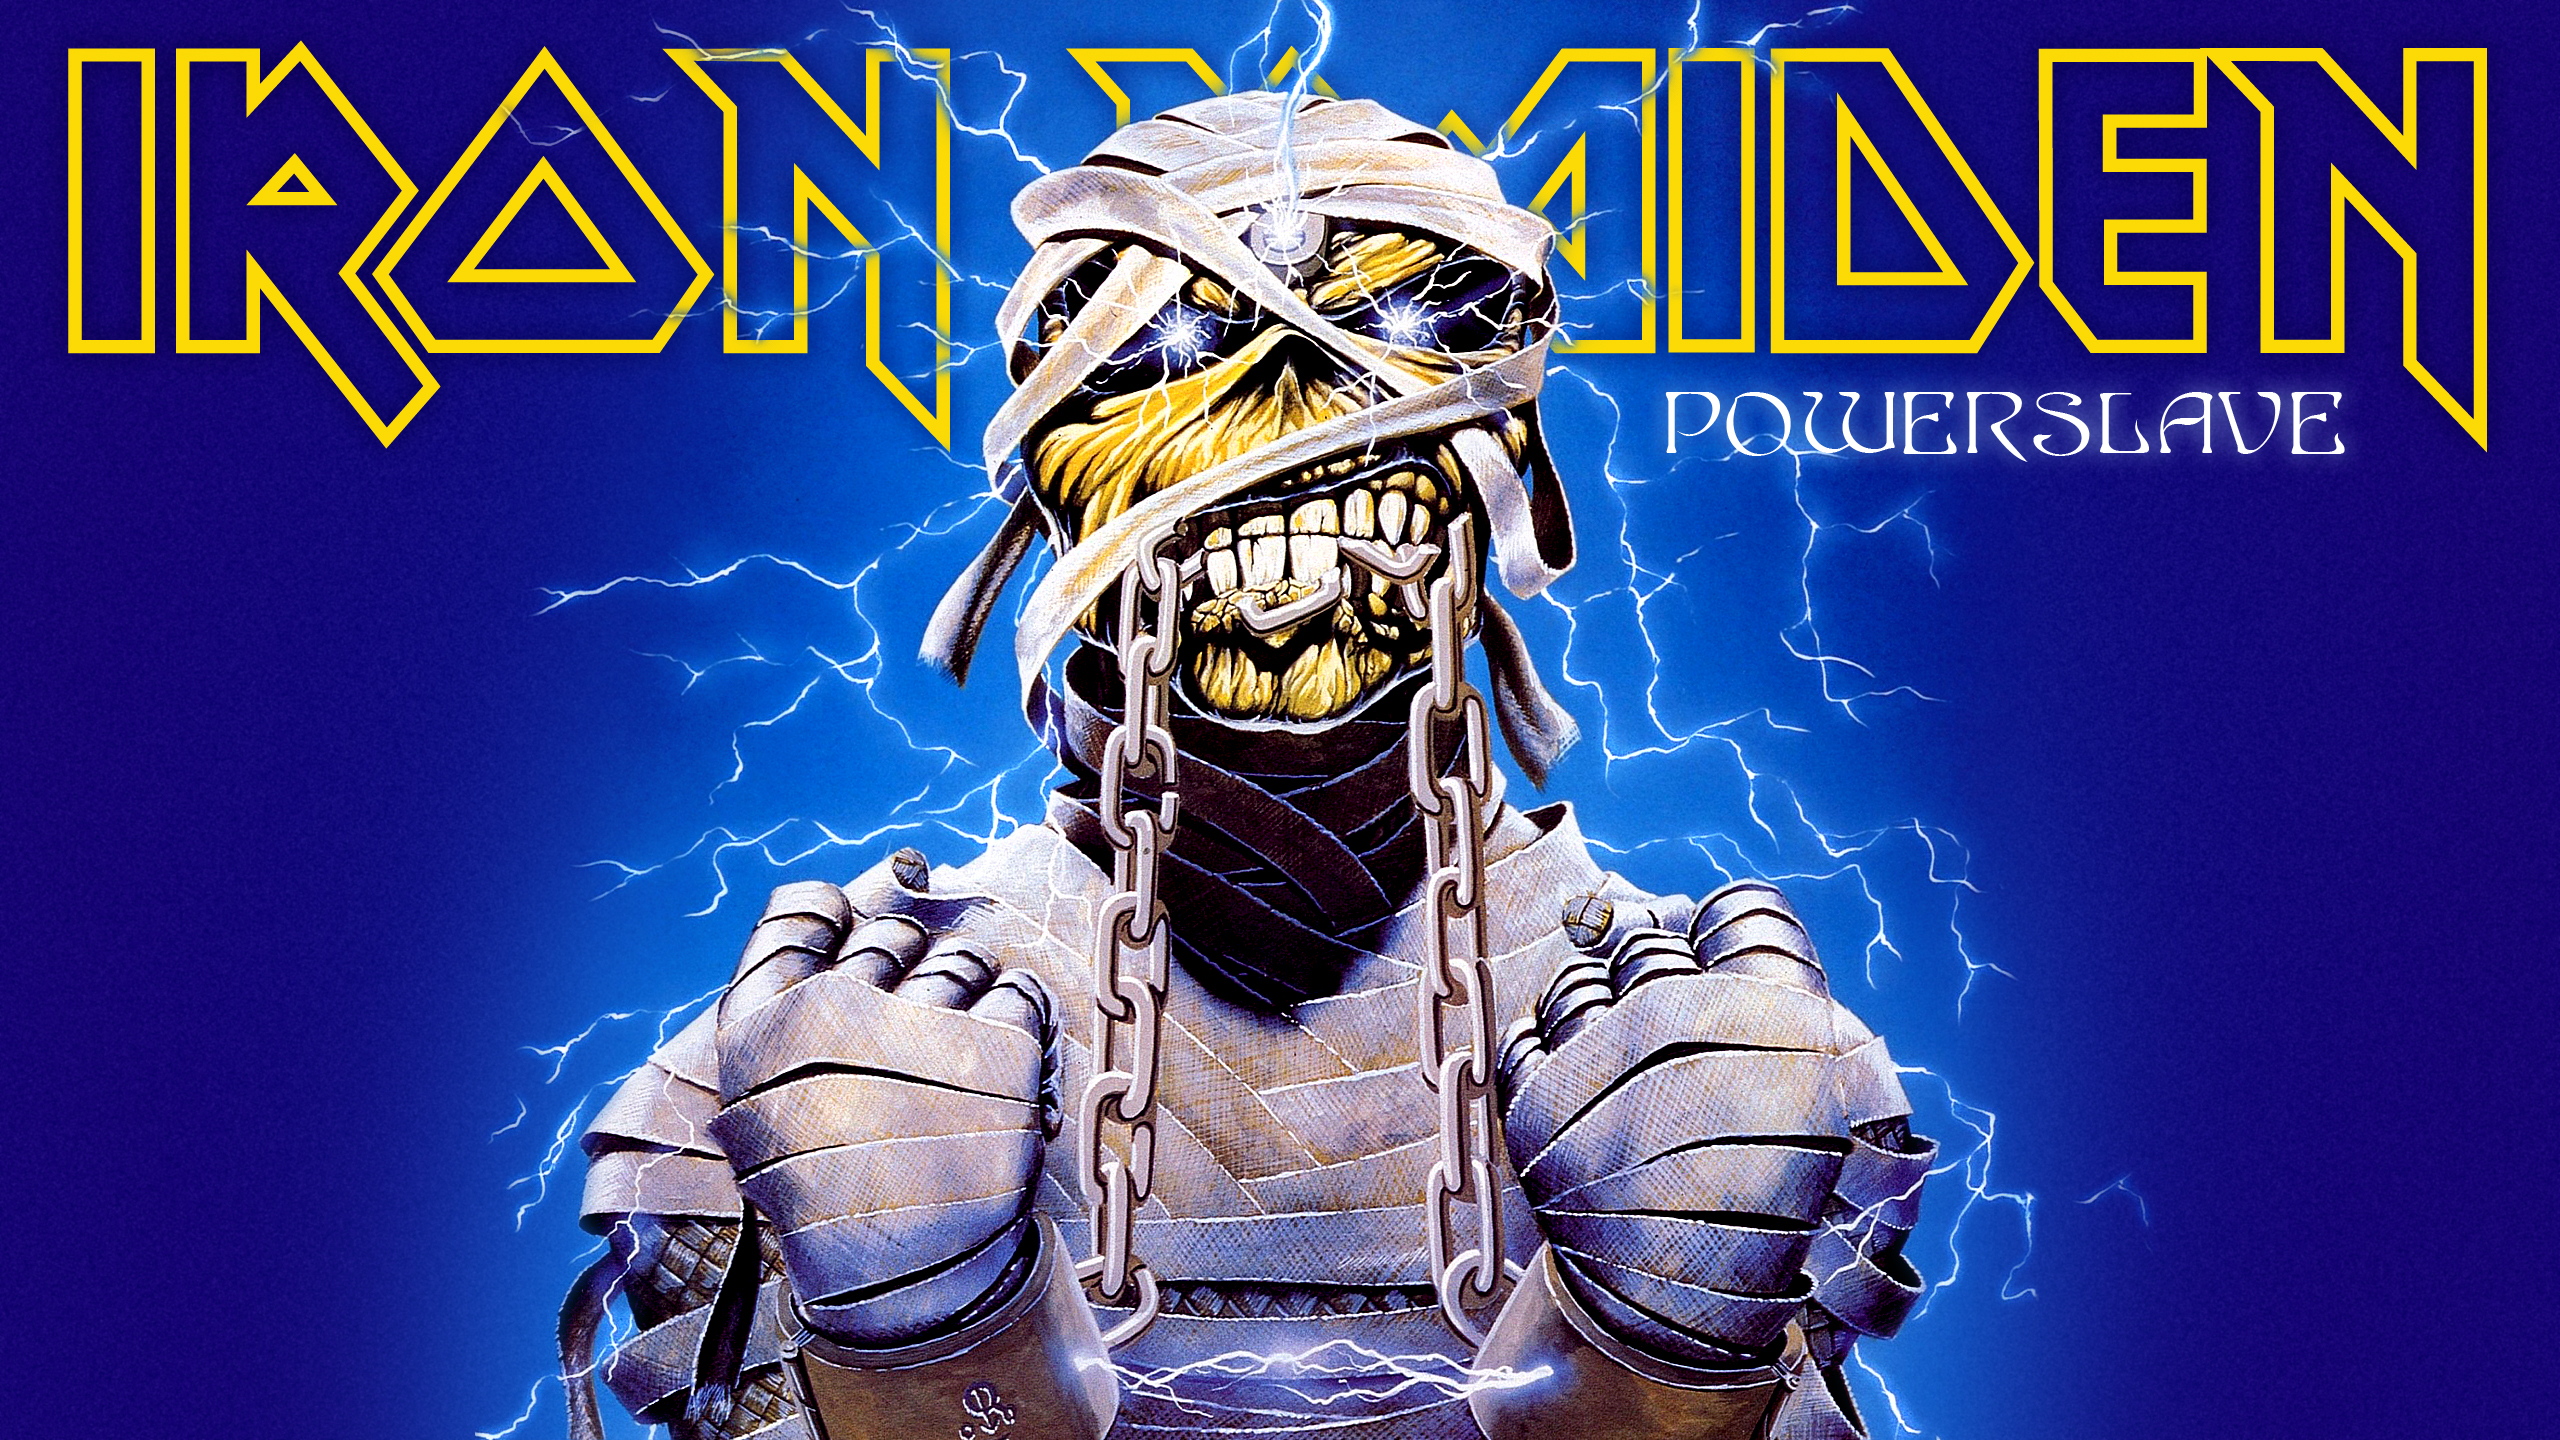 Iron Maiden HD Wallpaper Background Image